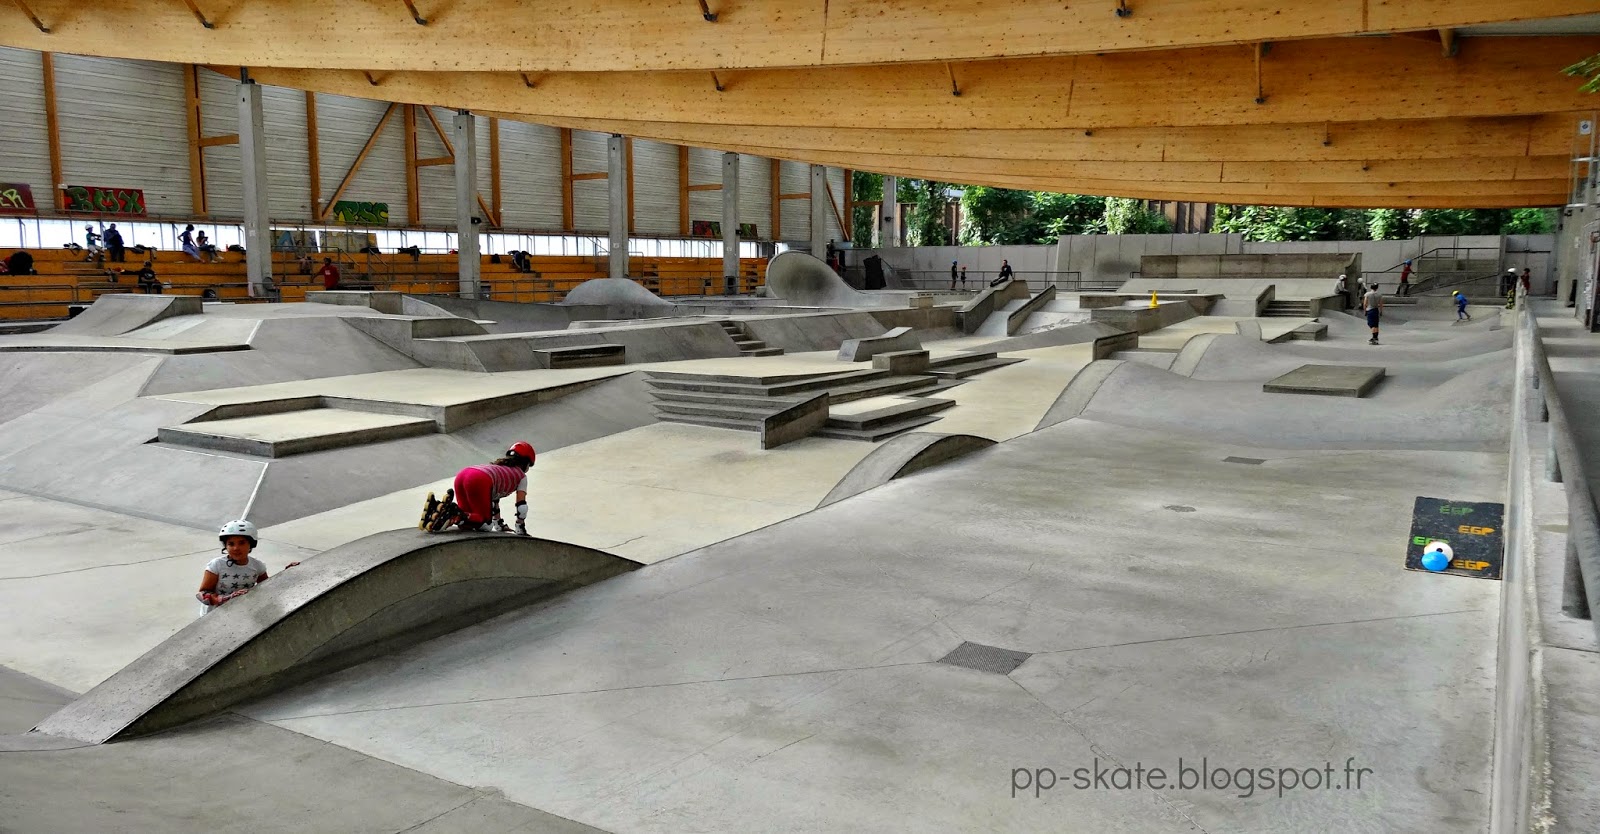 Skatepark paris porte chapelle